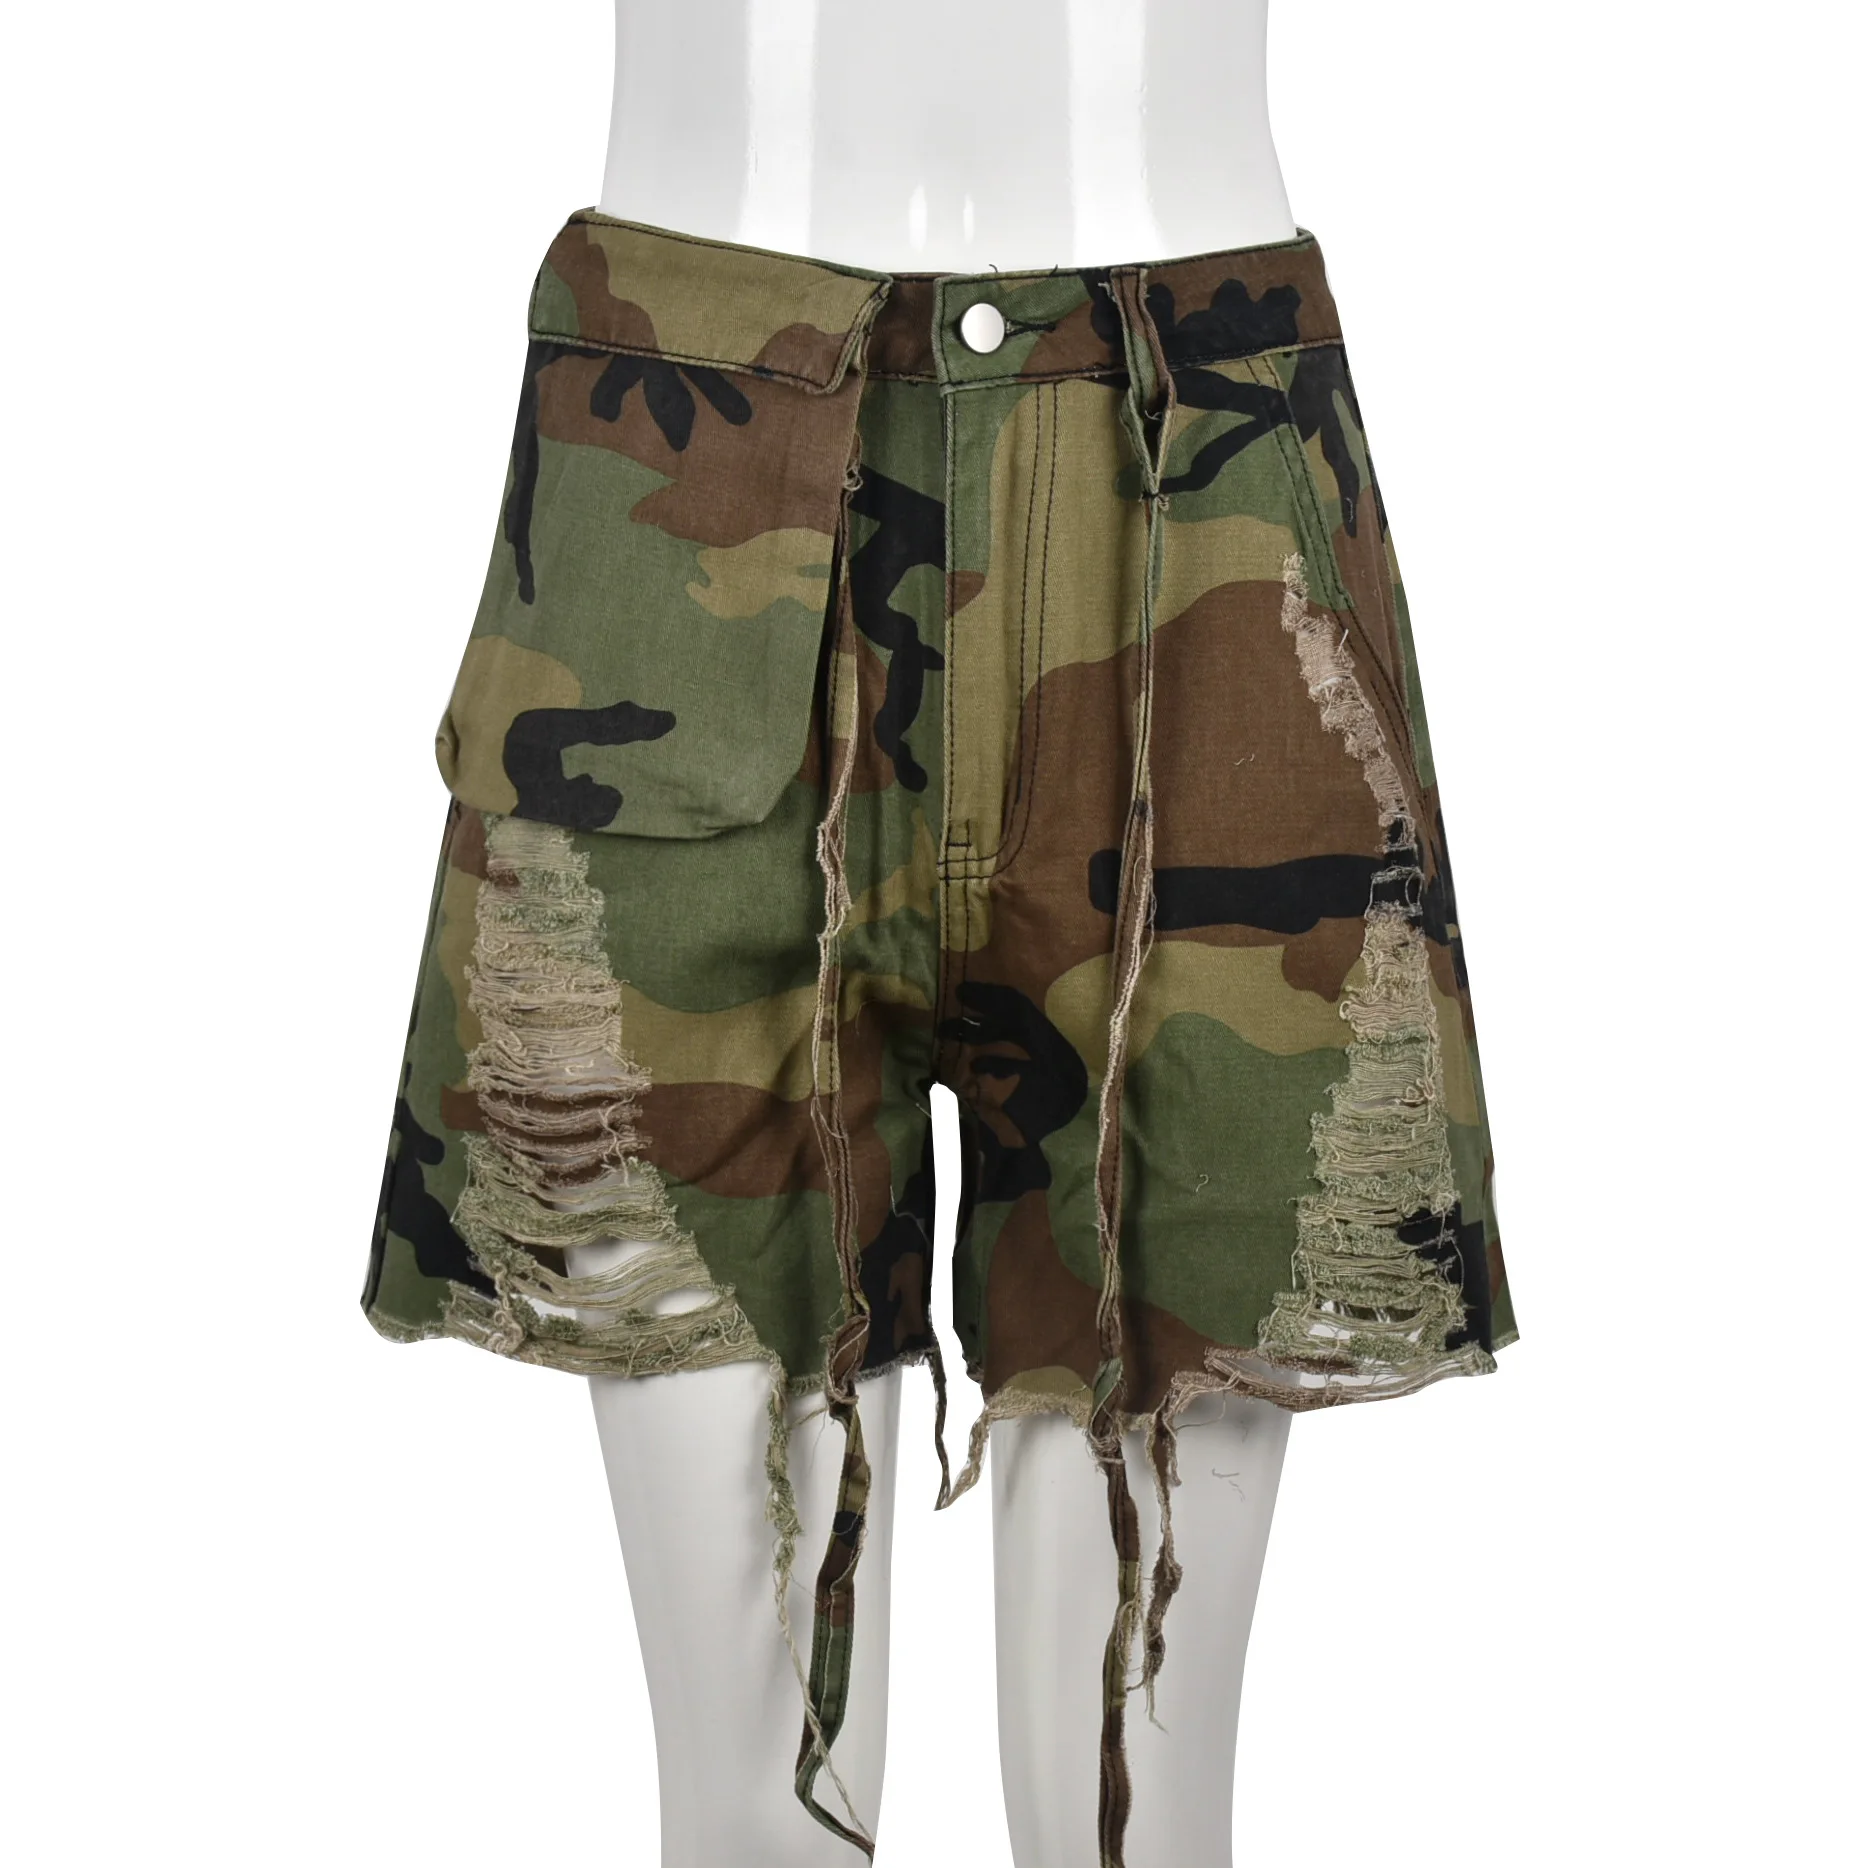 Shorts for Women Plus Size,Dainzuy Workout Fashion Summer Shorts Elastic Waist Camo Print Beach Casual Camouflage 